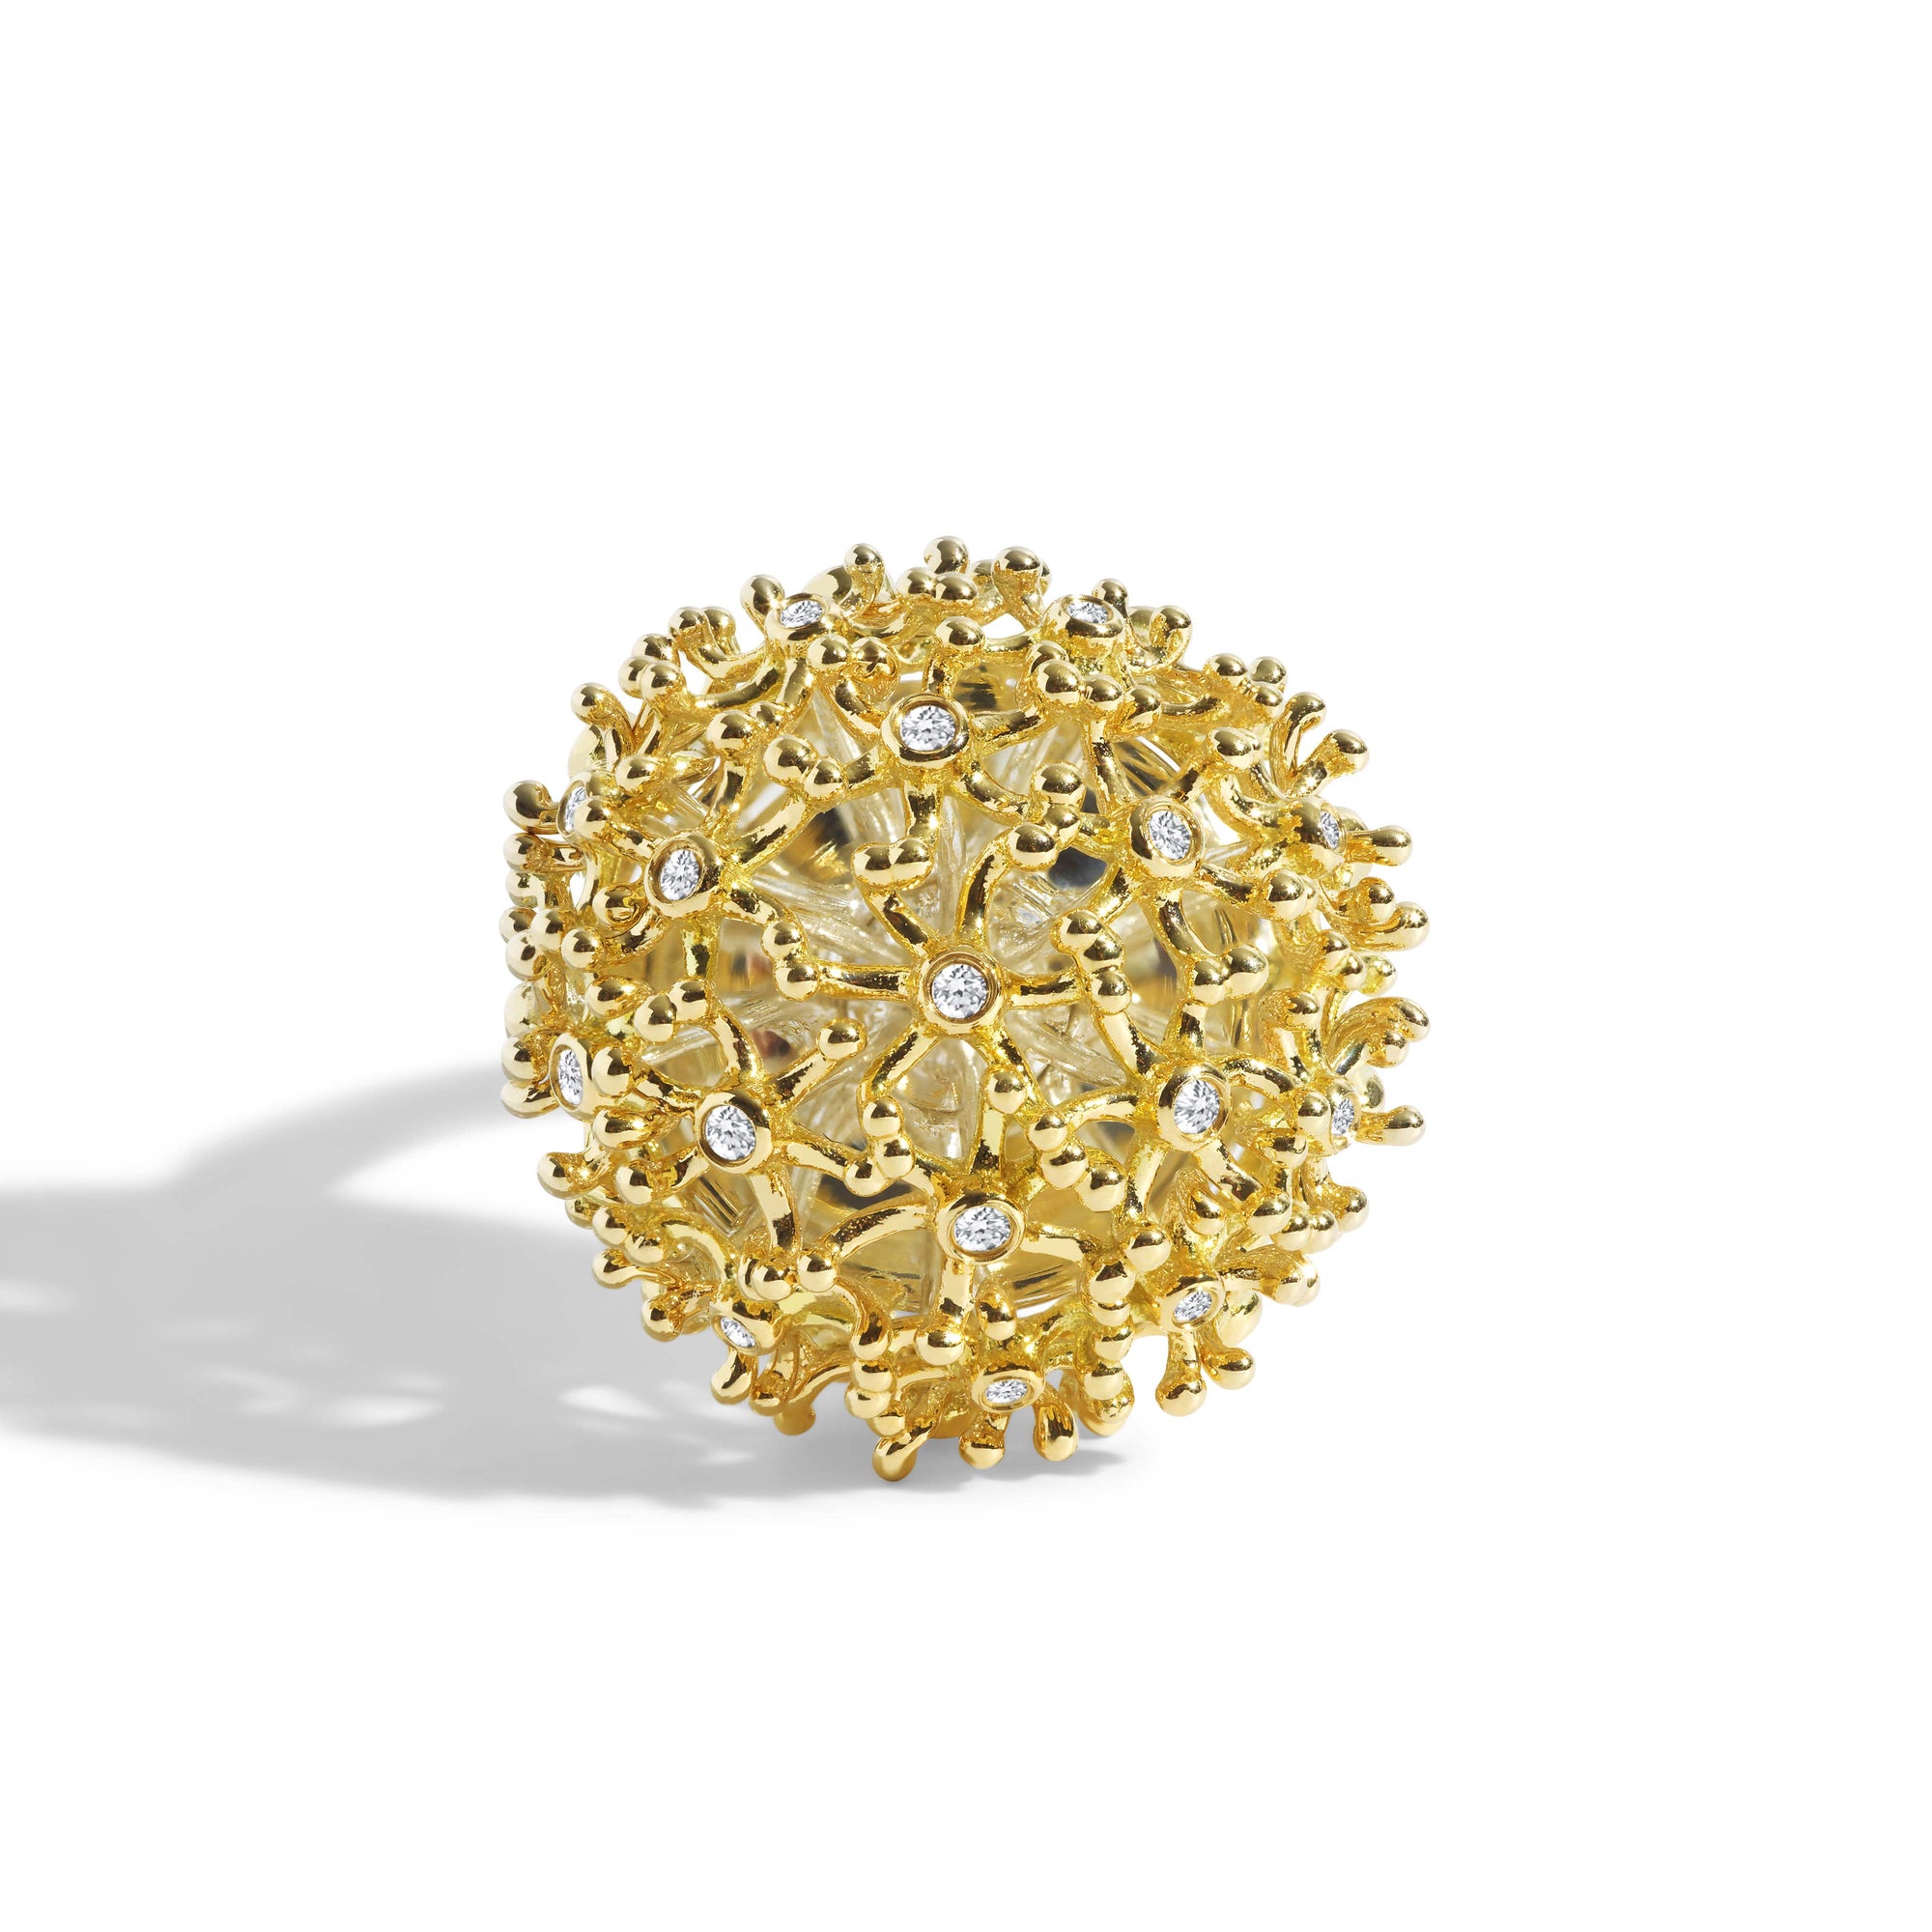 Michael Aram Dandelion Ring with Diamonds